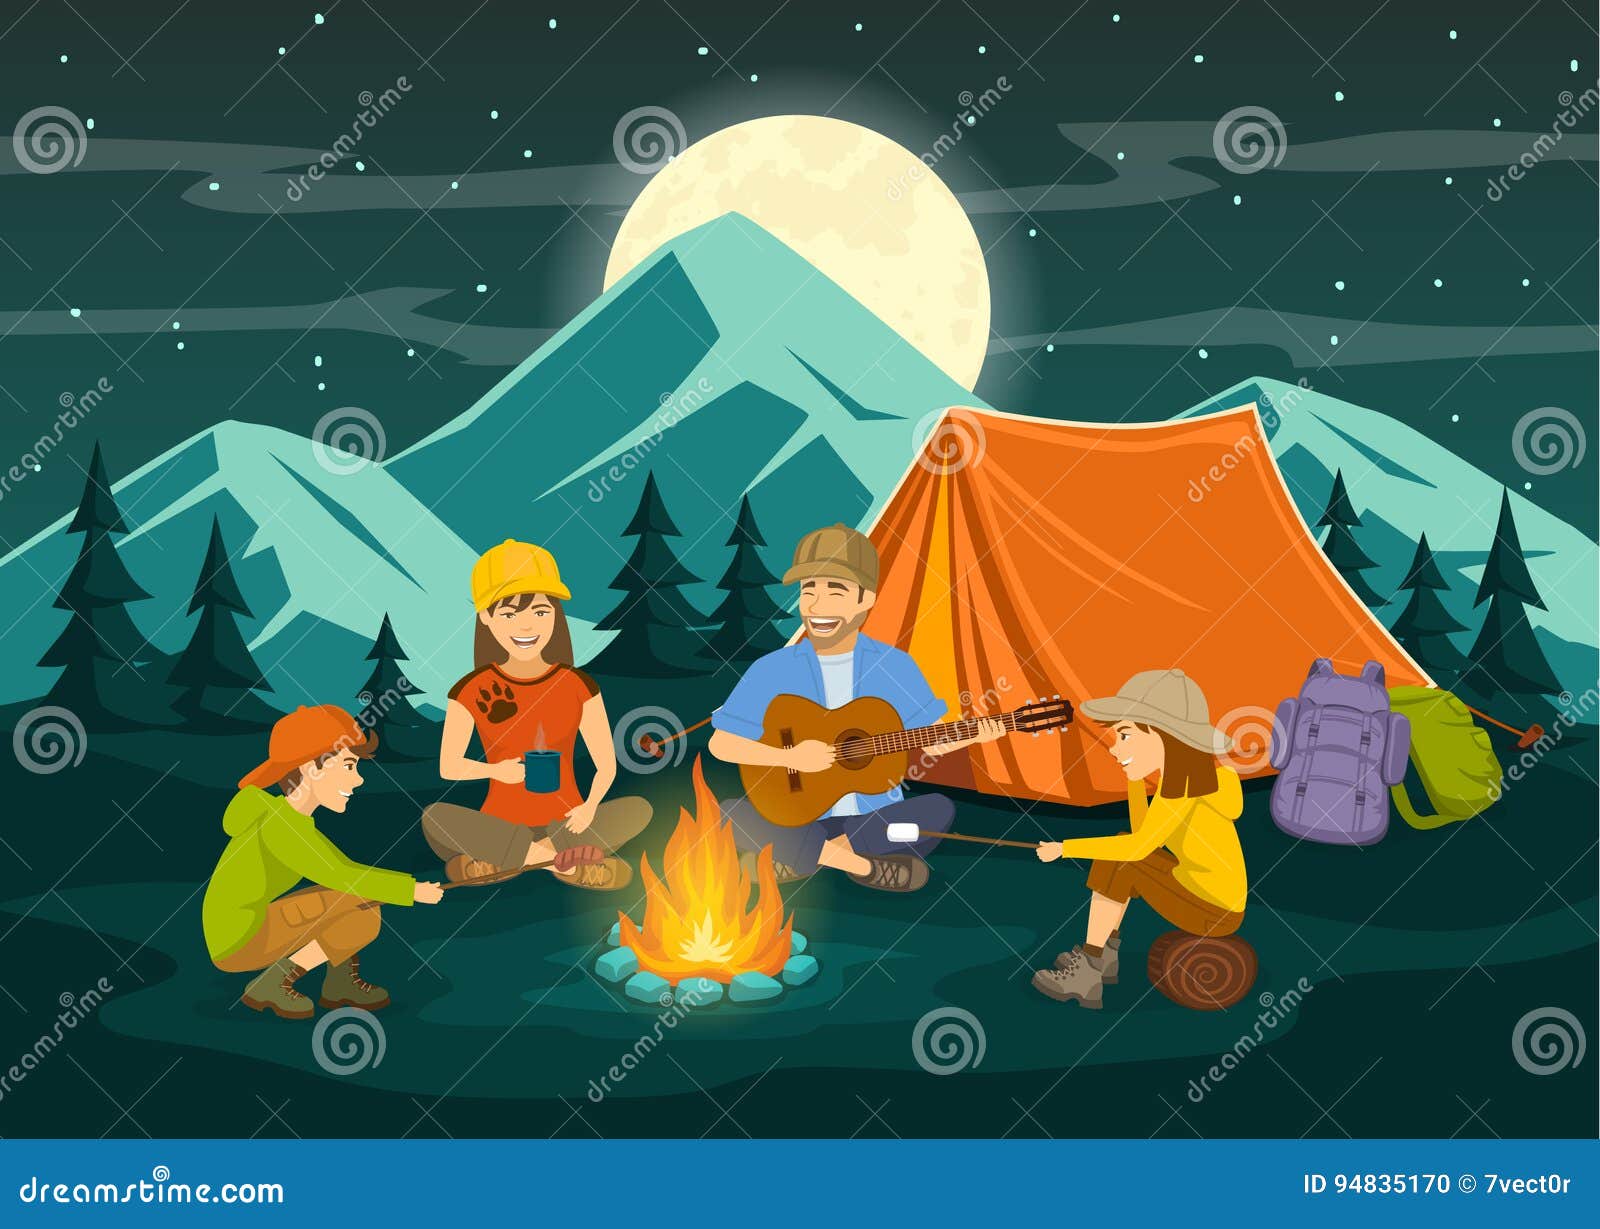 family sitting around campfire and tent, night scene